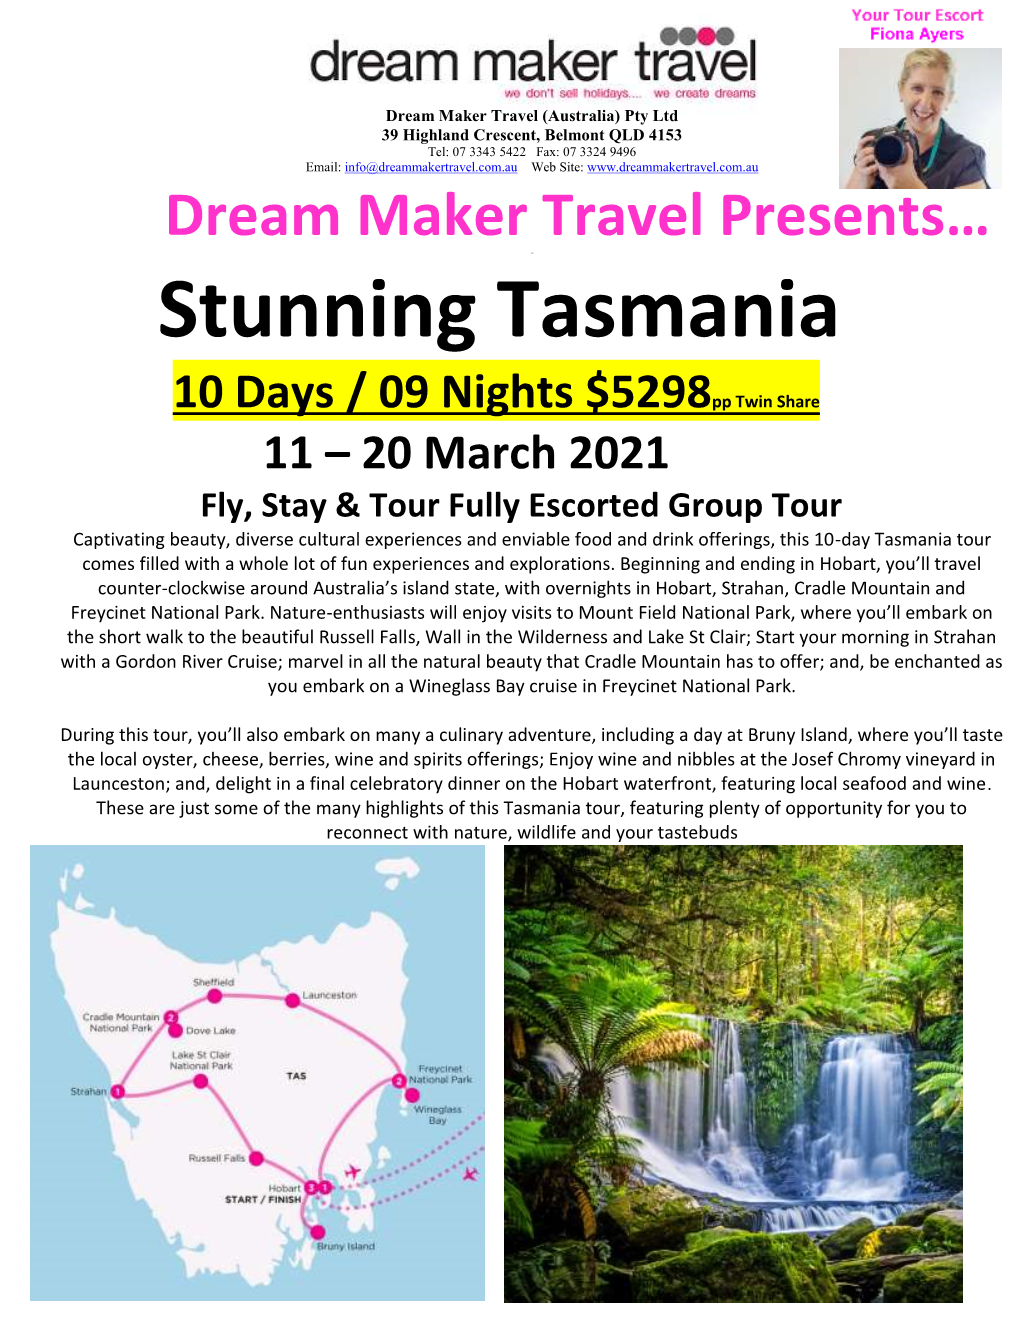 Stunning Tasmania